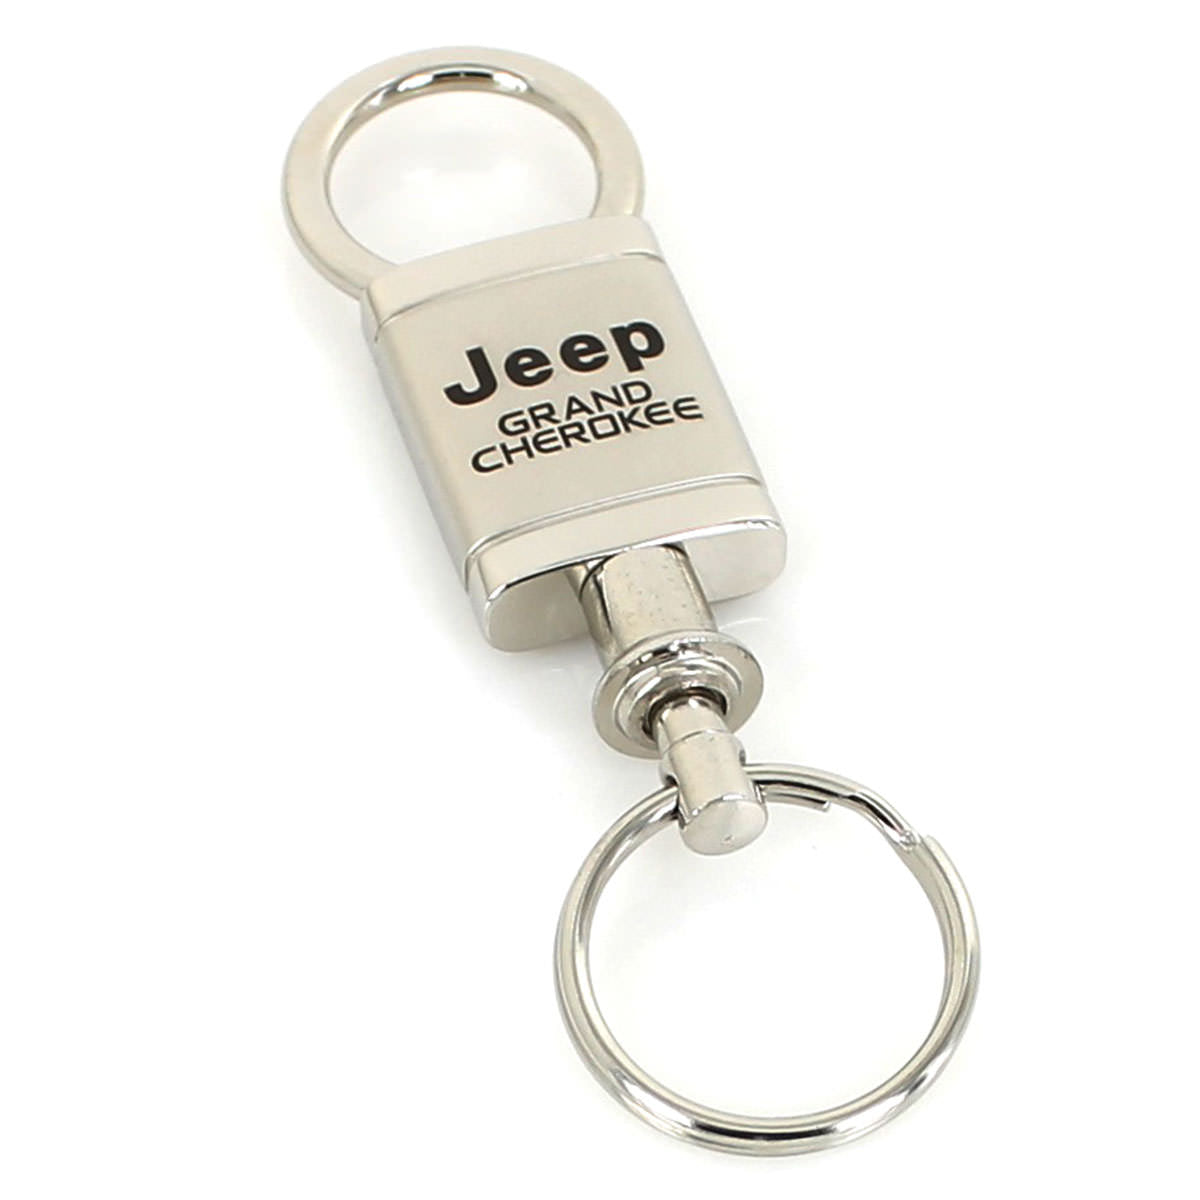 Jeep Grand Cherokee Key Chain